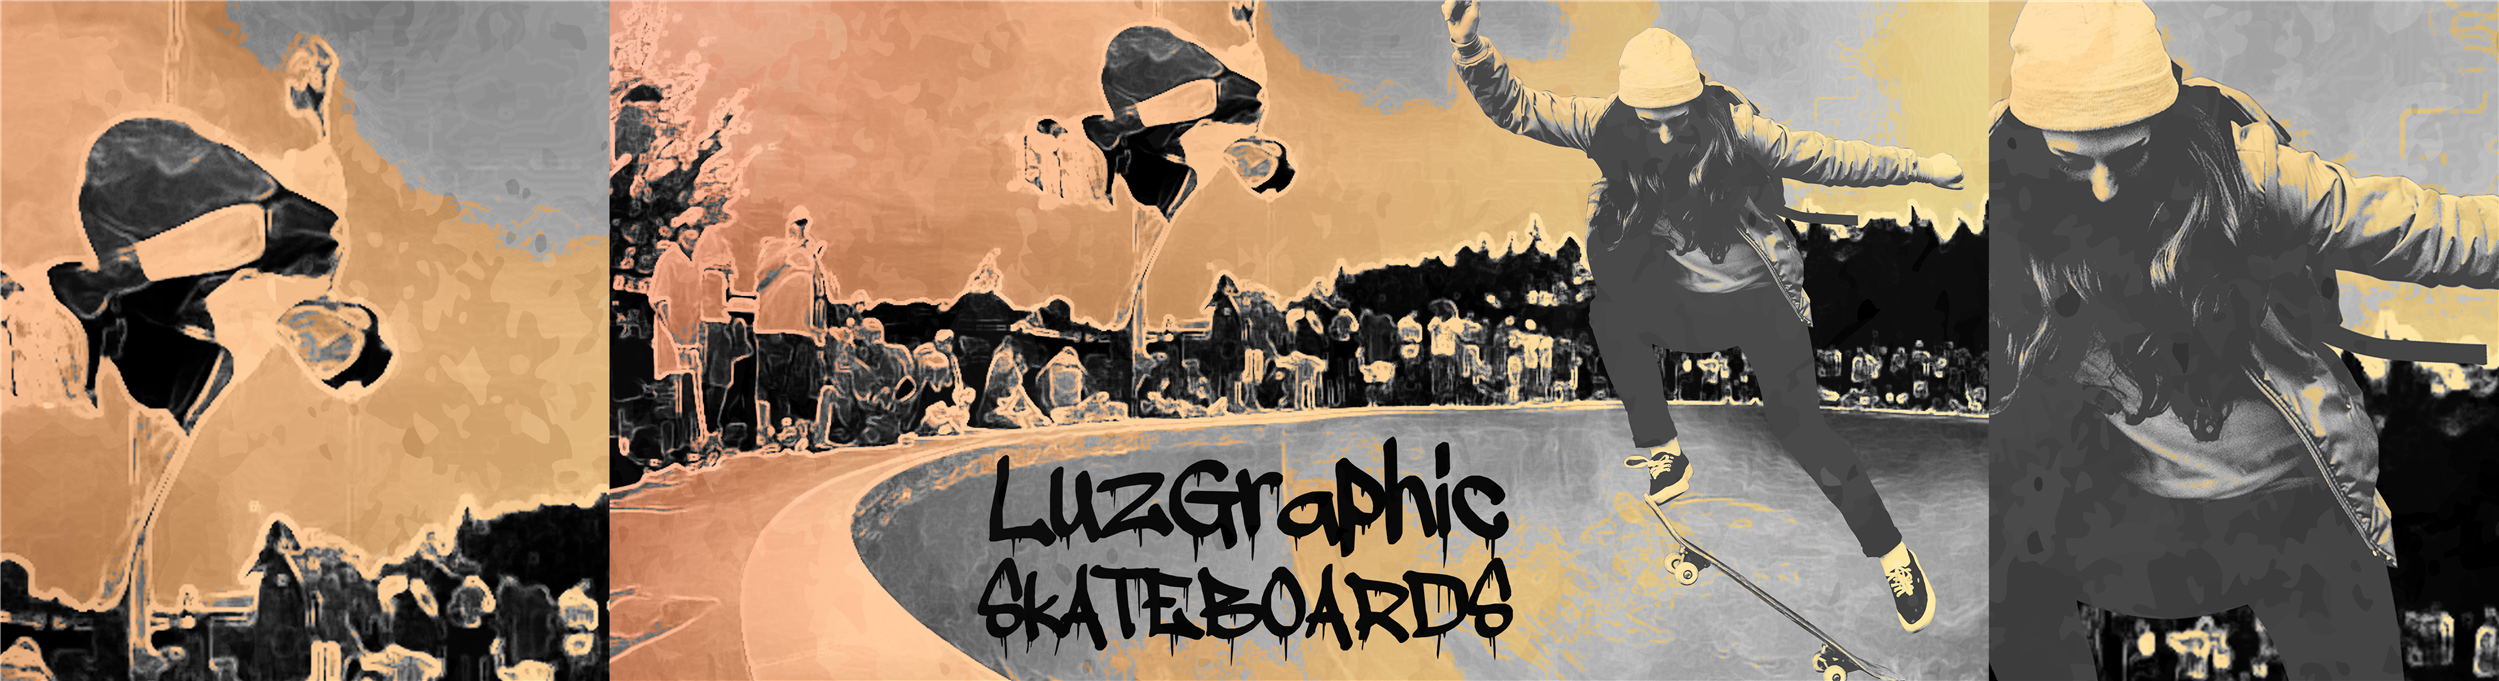 LuzGraphic SkateBoards